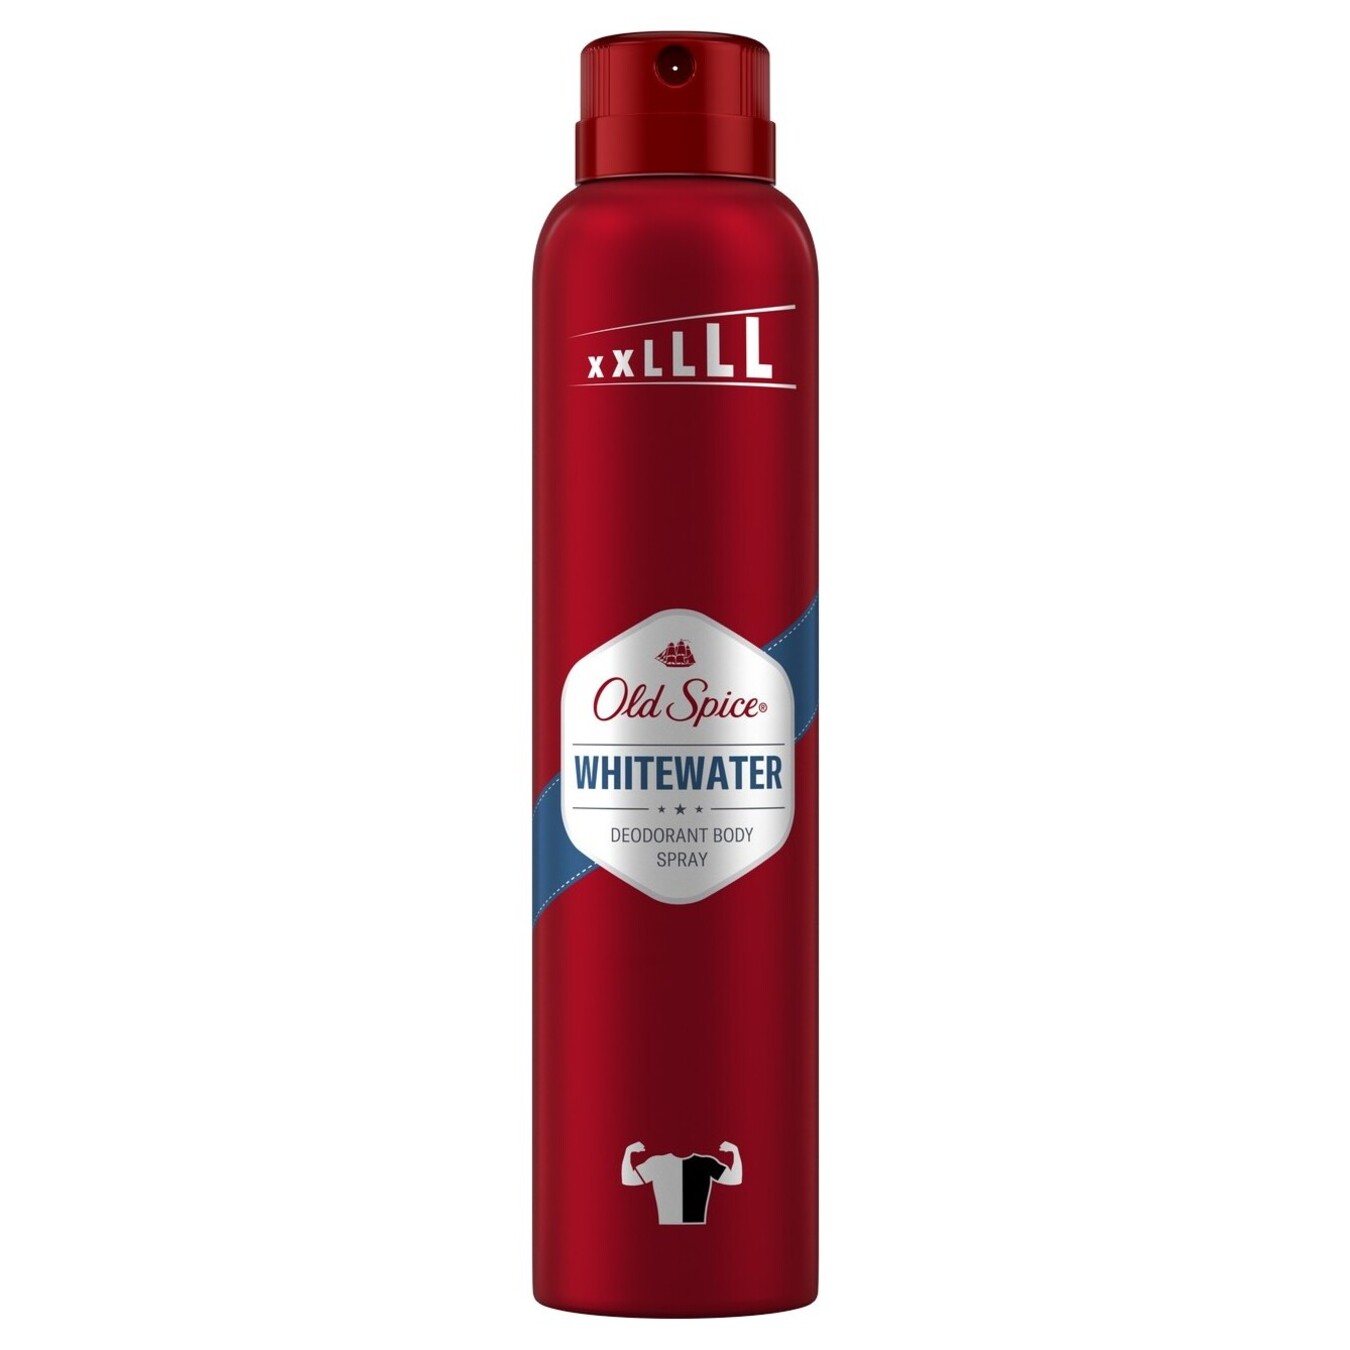 Deodorant Old Spice Whitewater aerosol 250ml